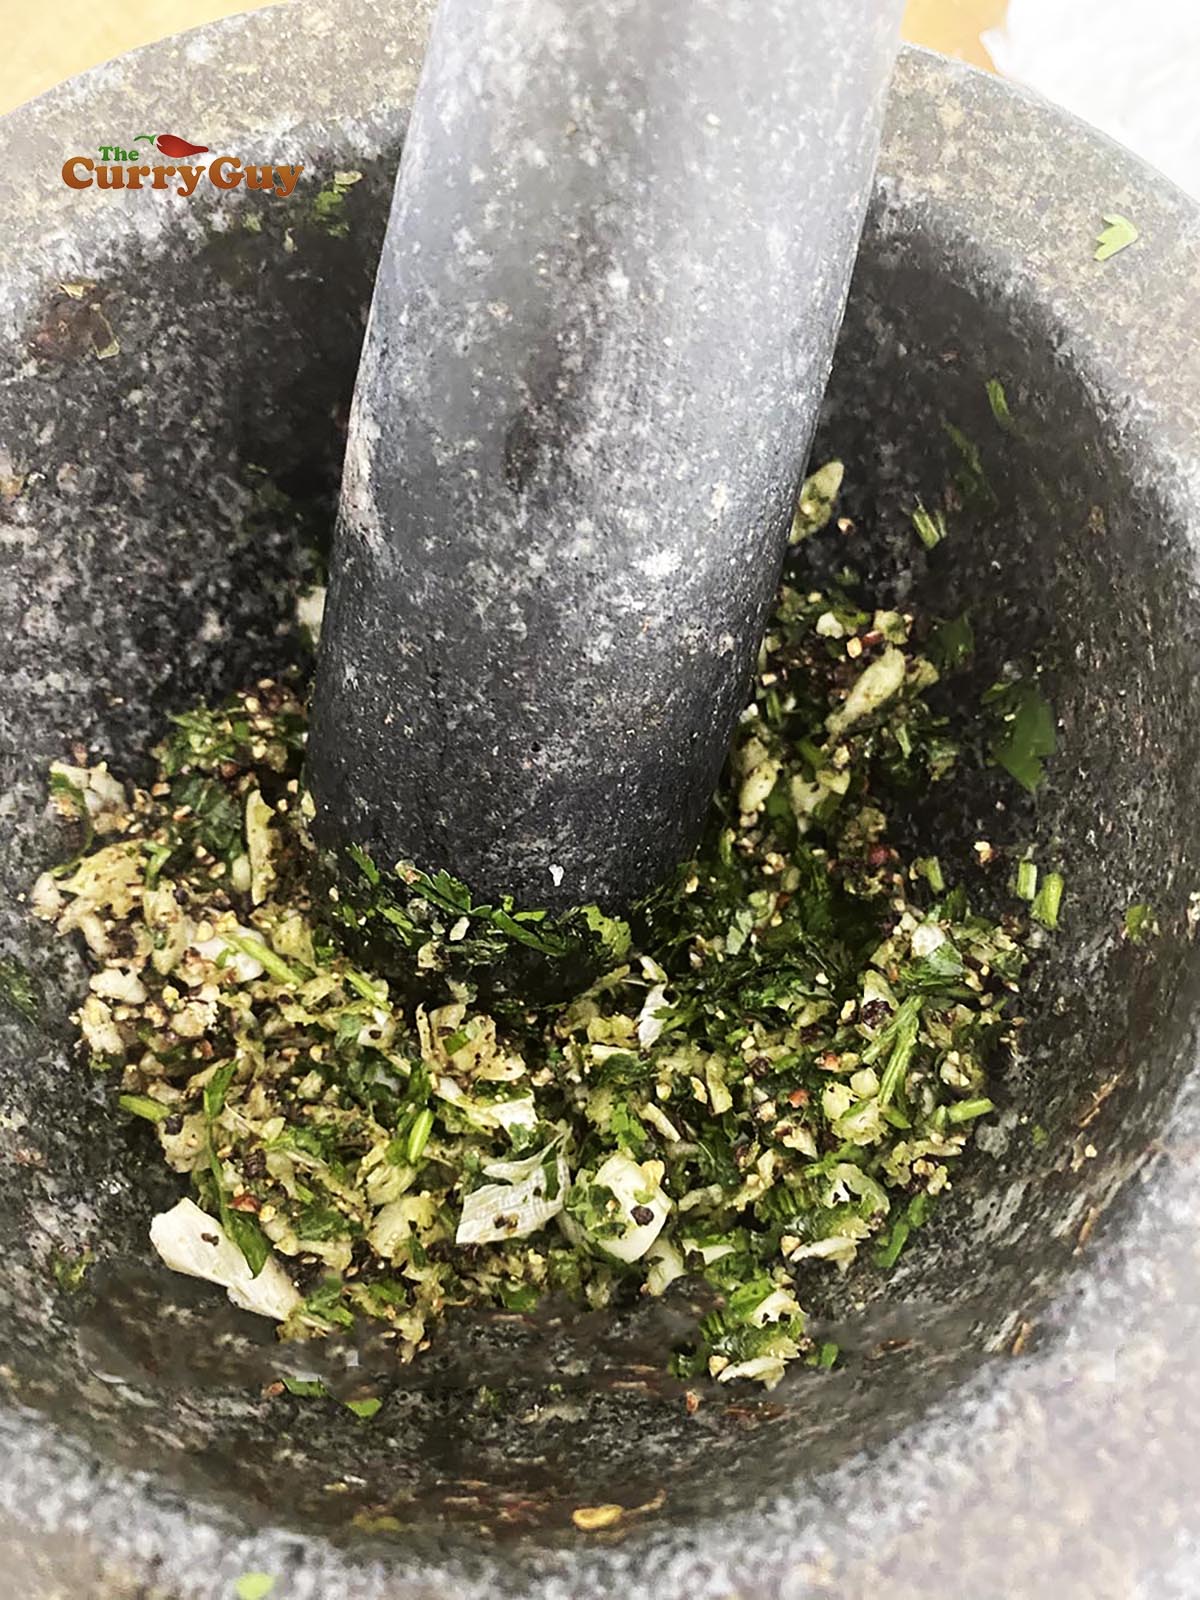 Smashing garlic and coriander in a pestle and mortar.